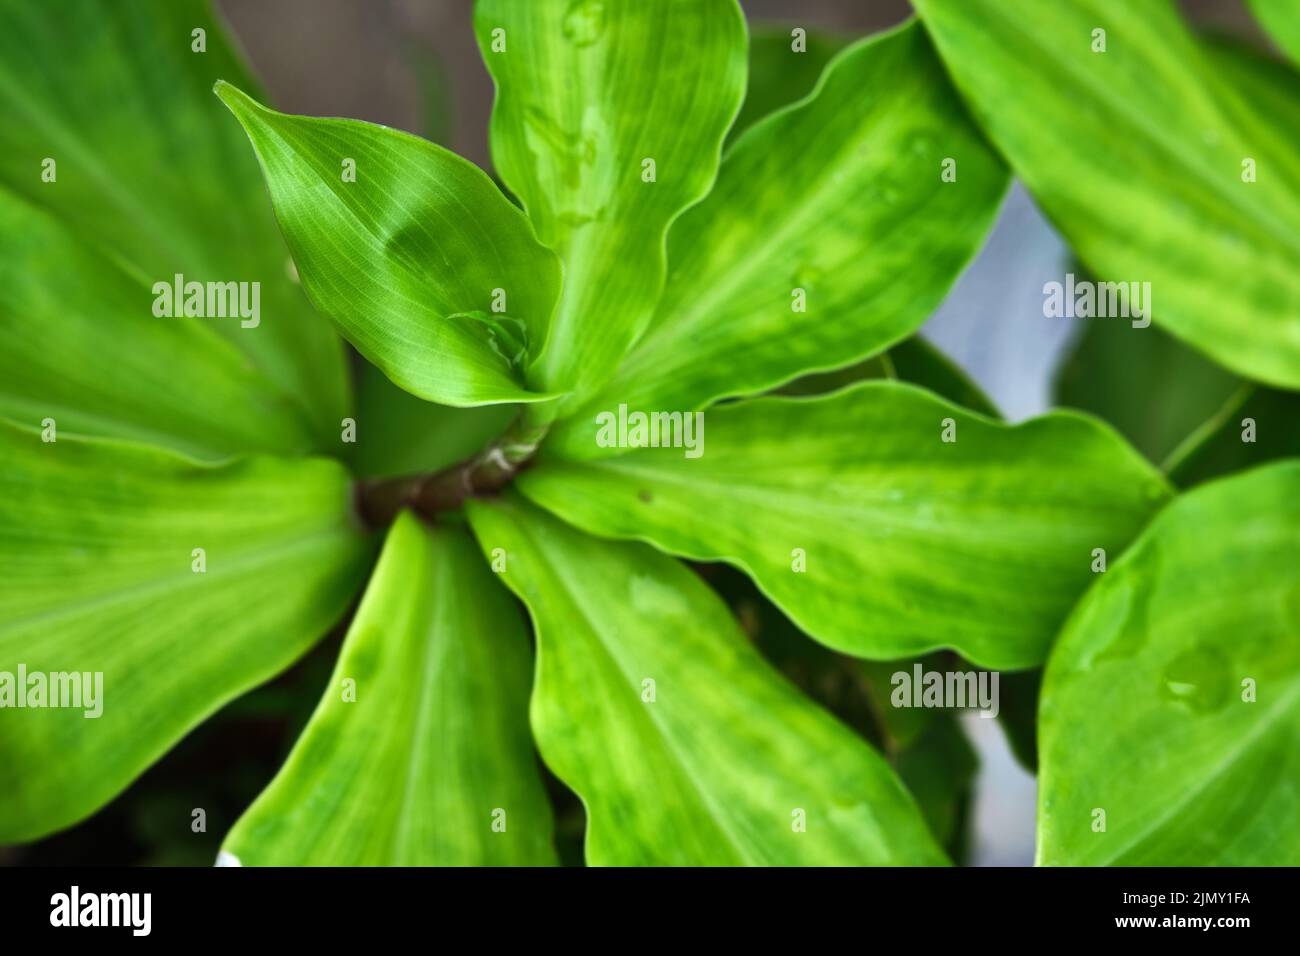 Green Insulin plant for Diabetes, a natural cure for diabetes (Chamaecostus cuspidatus), medicinal plants. Stock Photo